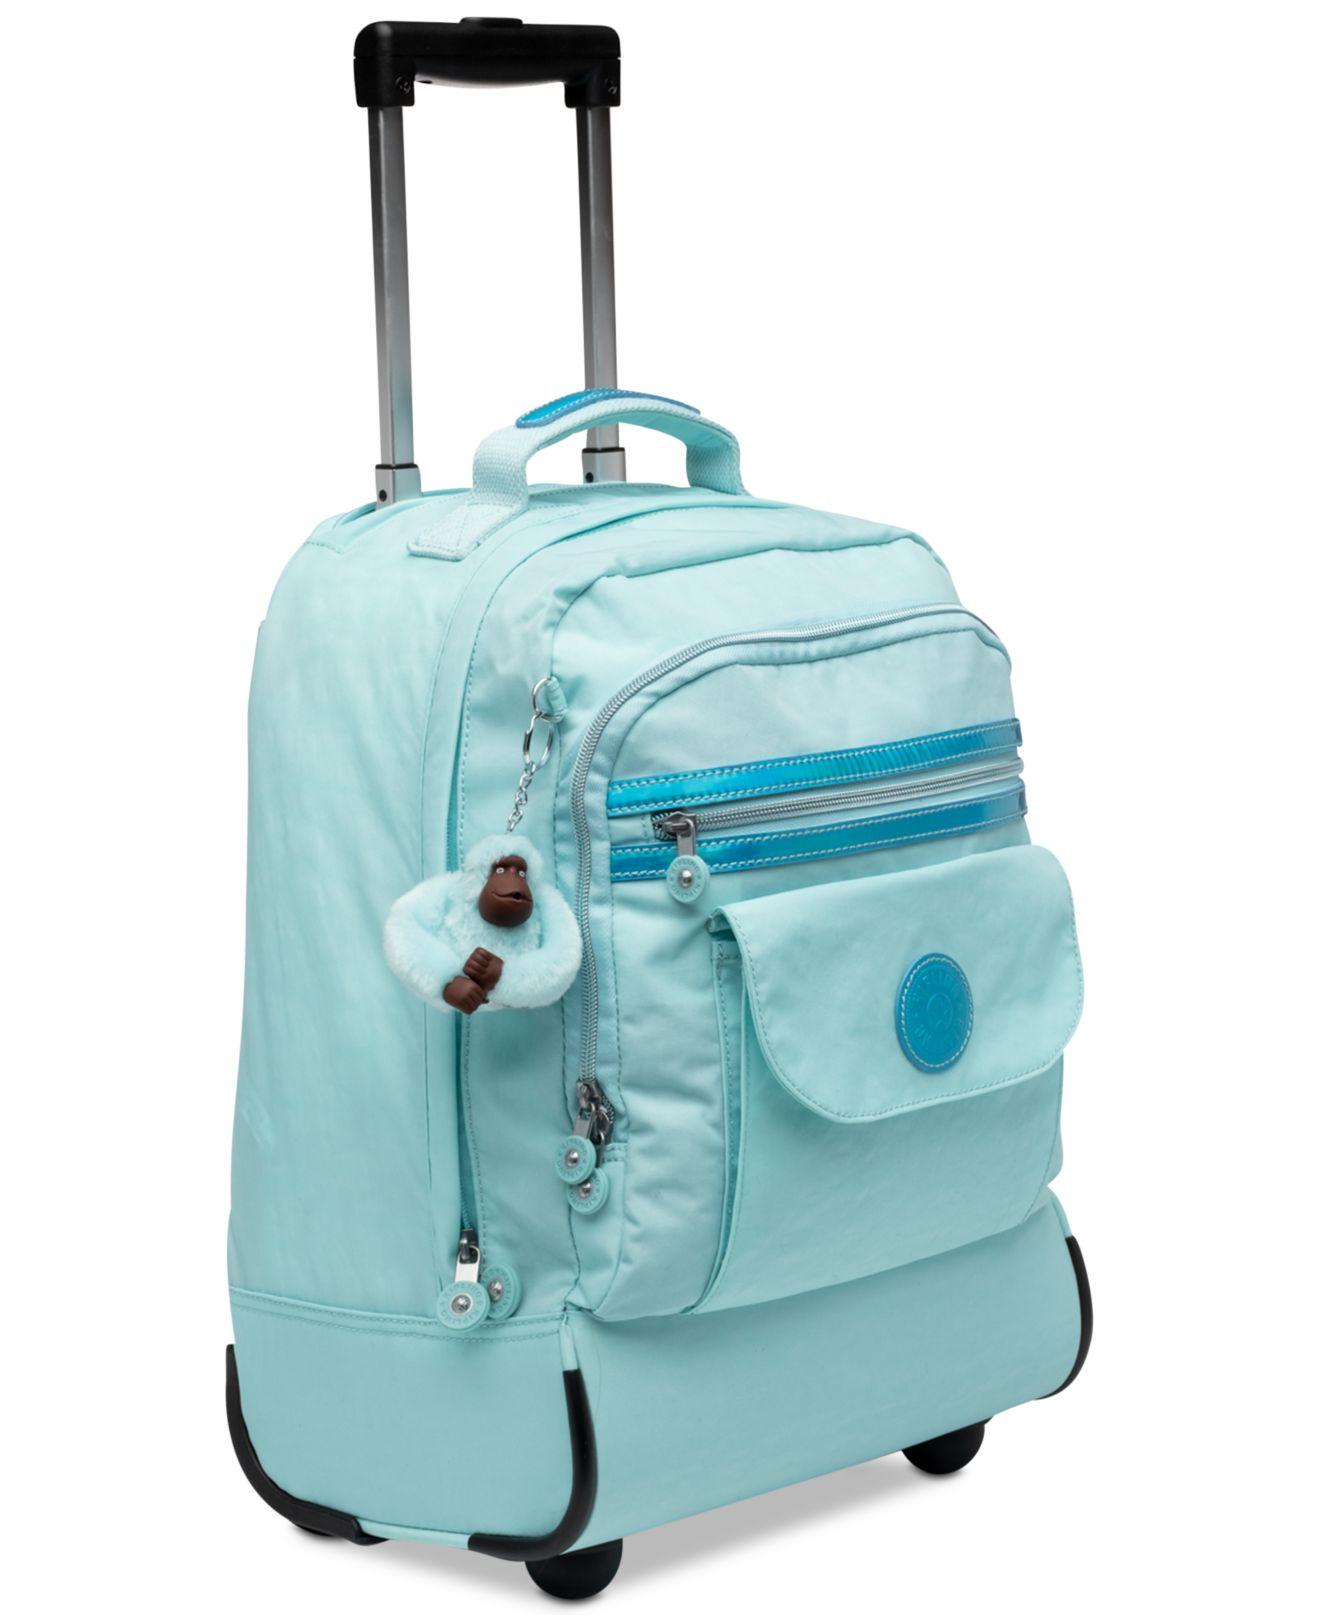 Kipling Synthetic Luggage Sanaa Wheeled Backpack in Blue - Lyst